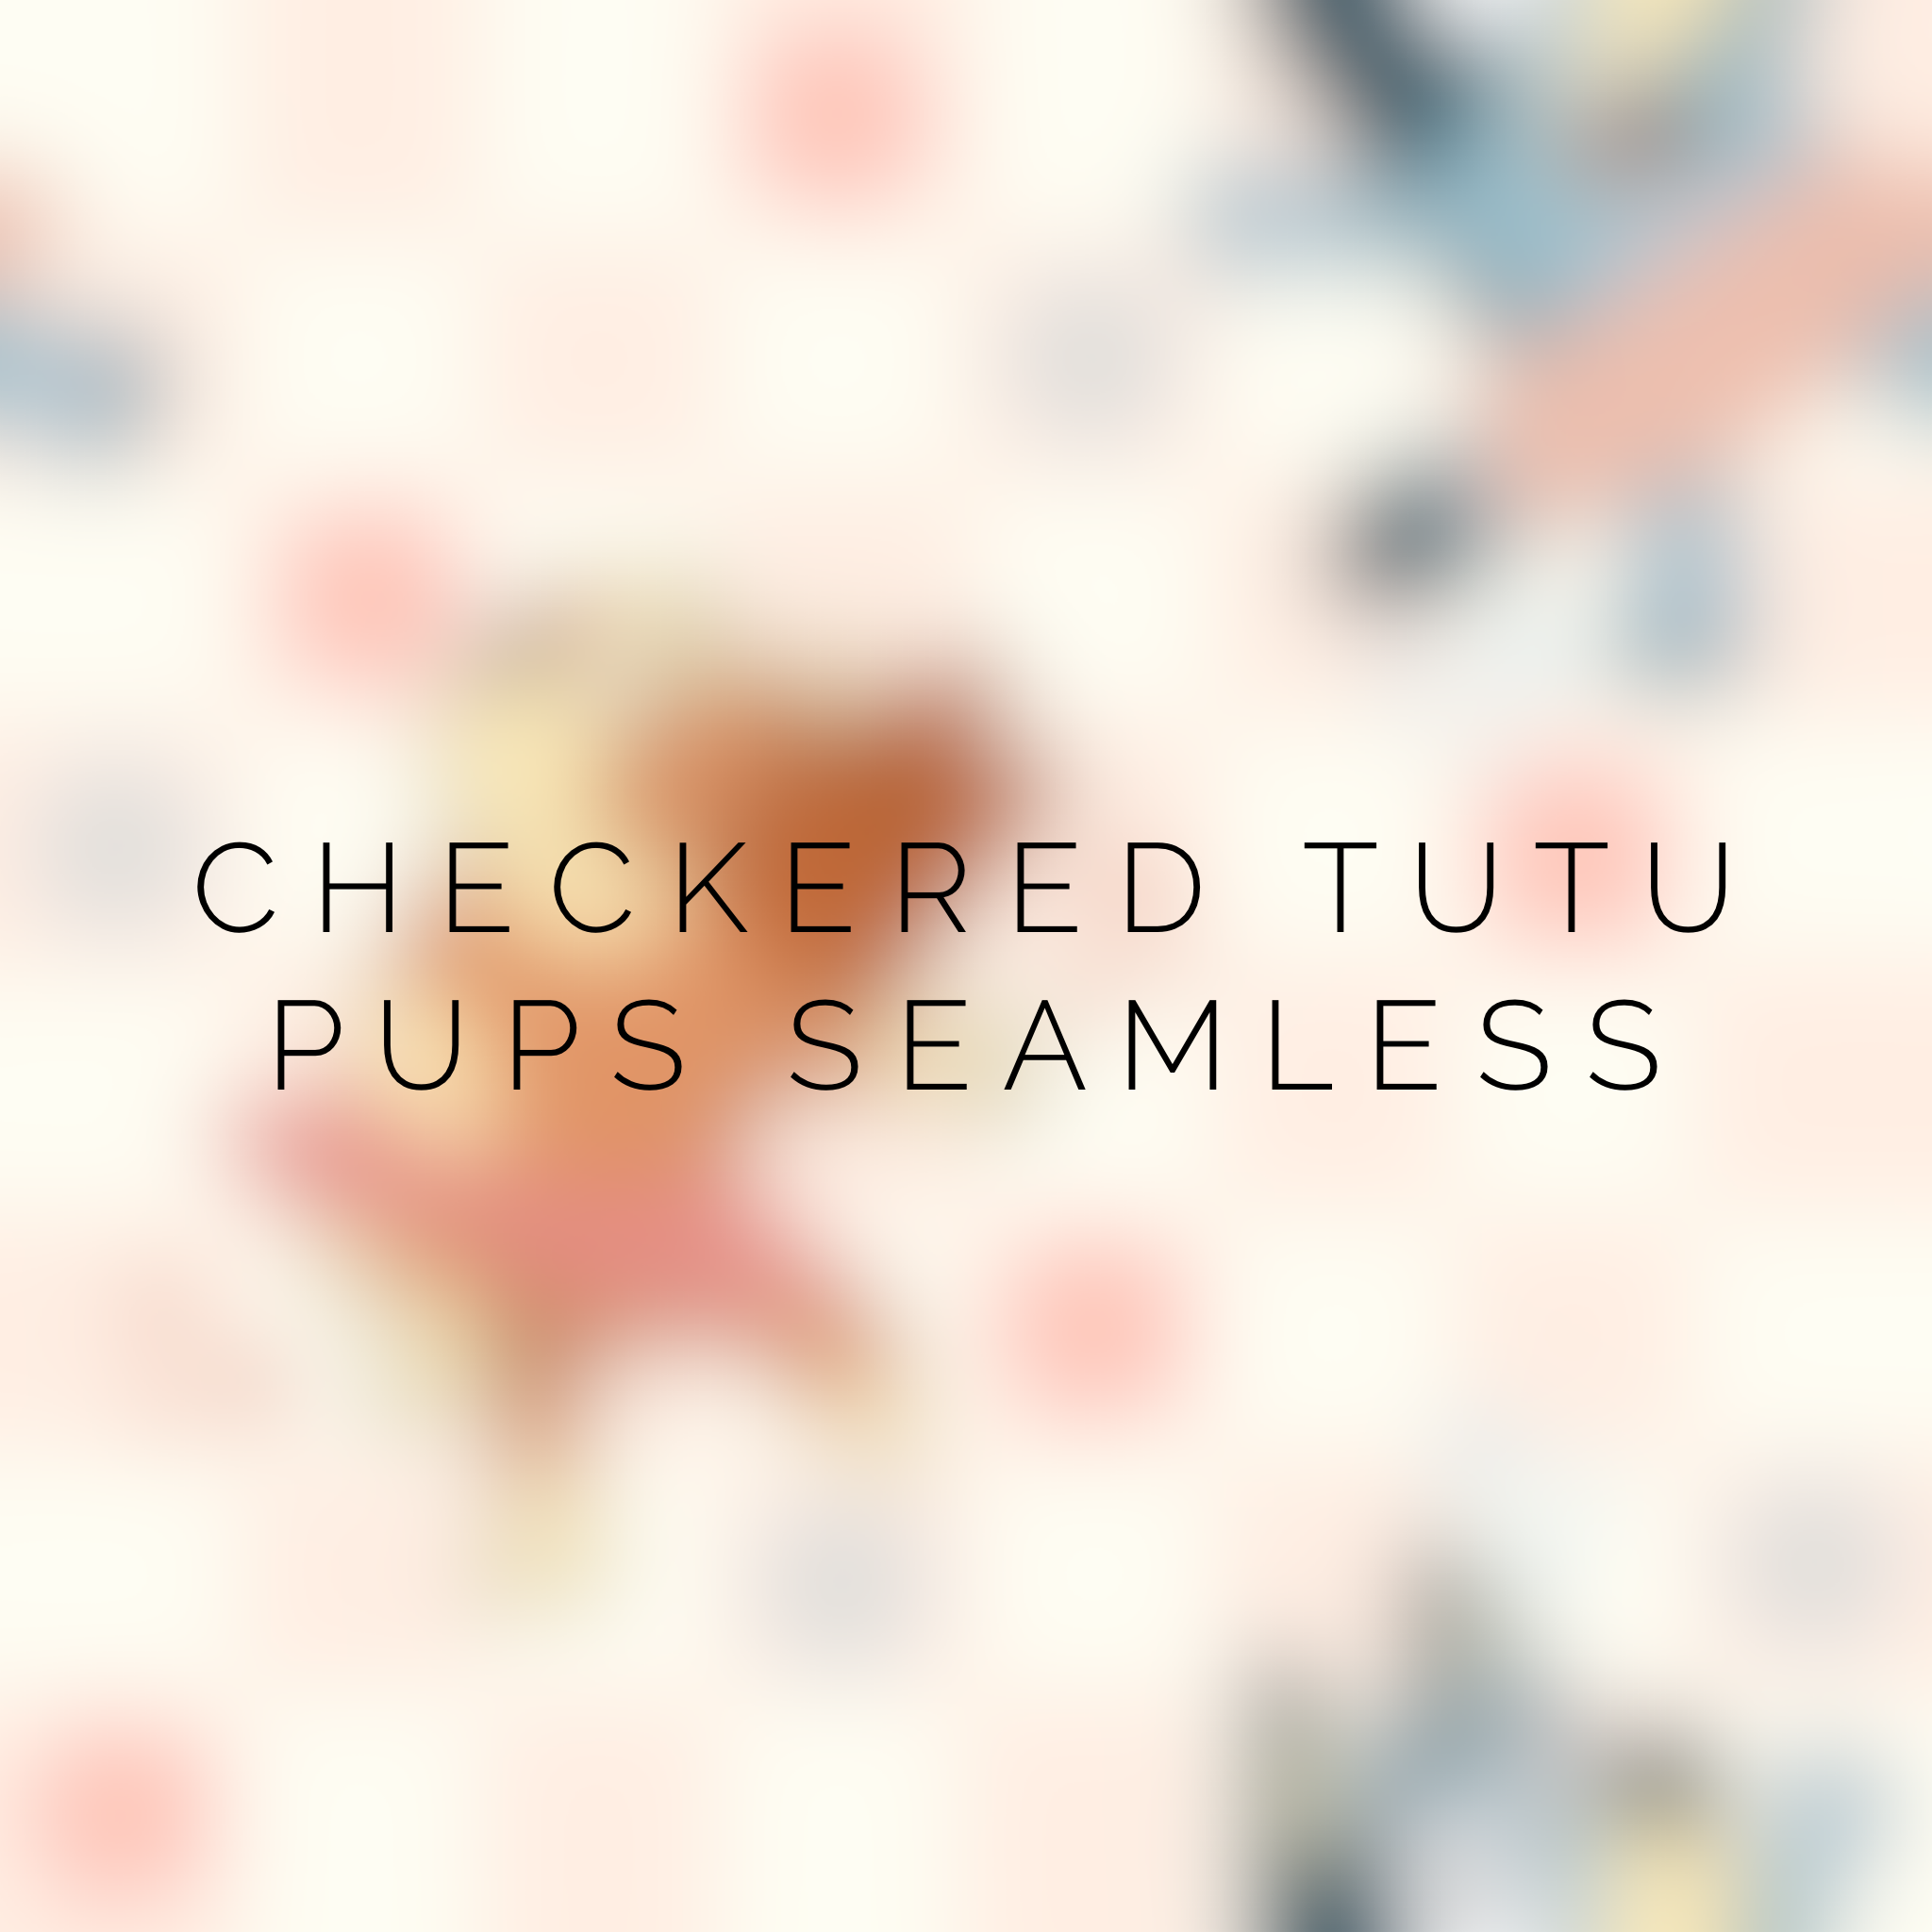 Checkered tutu pups seamless